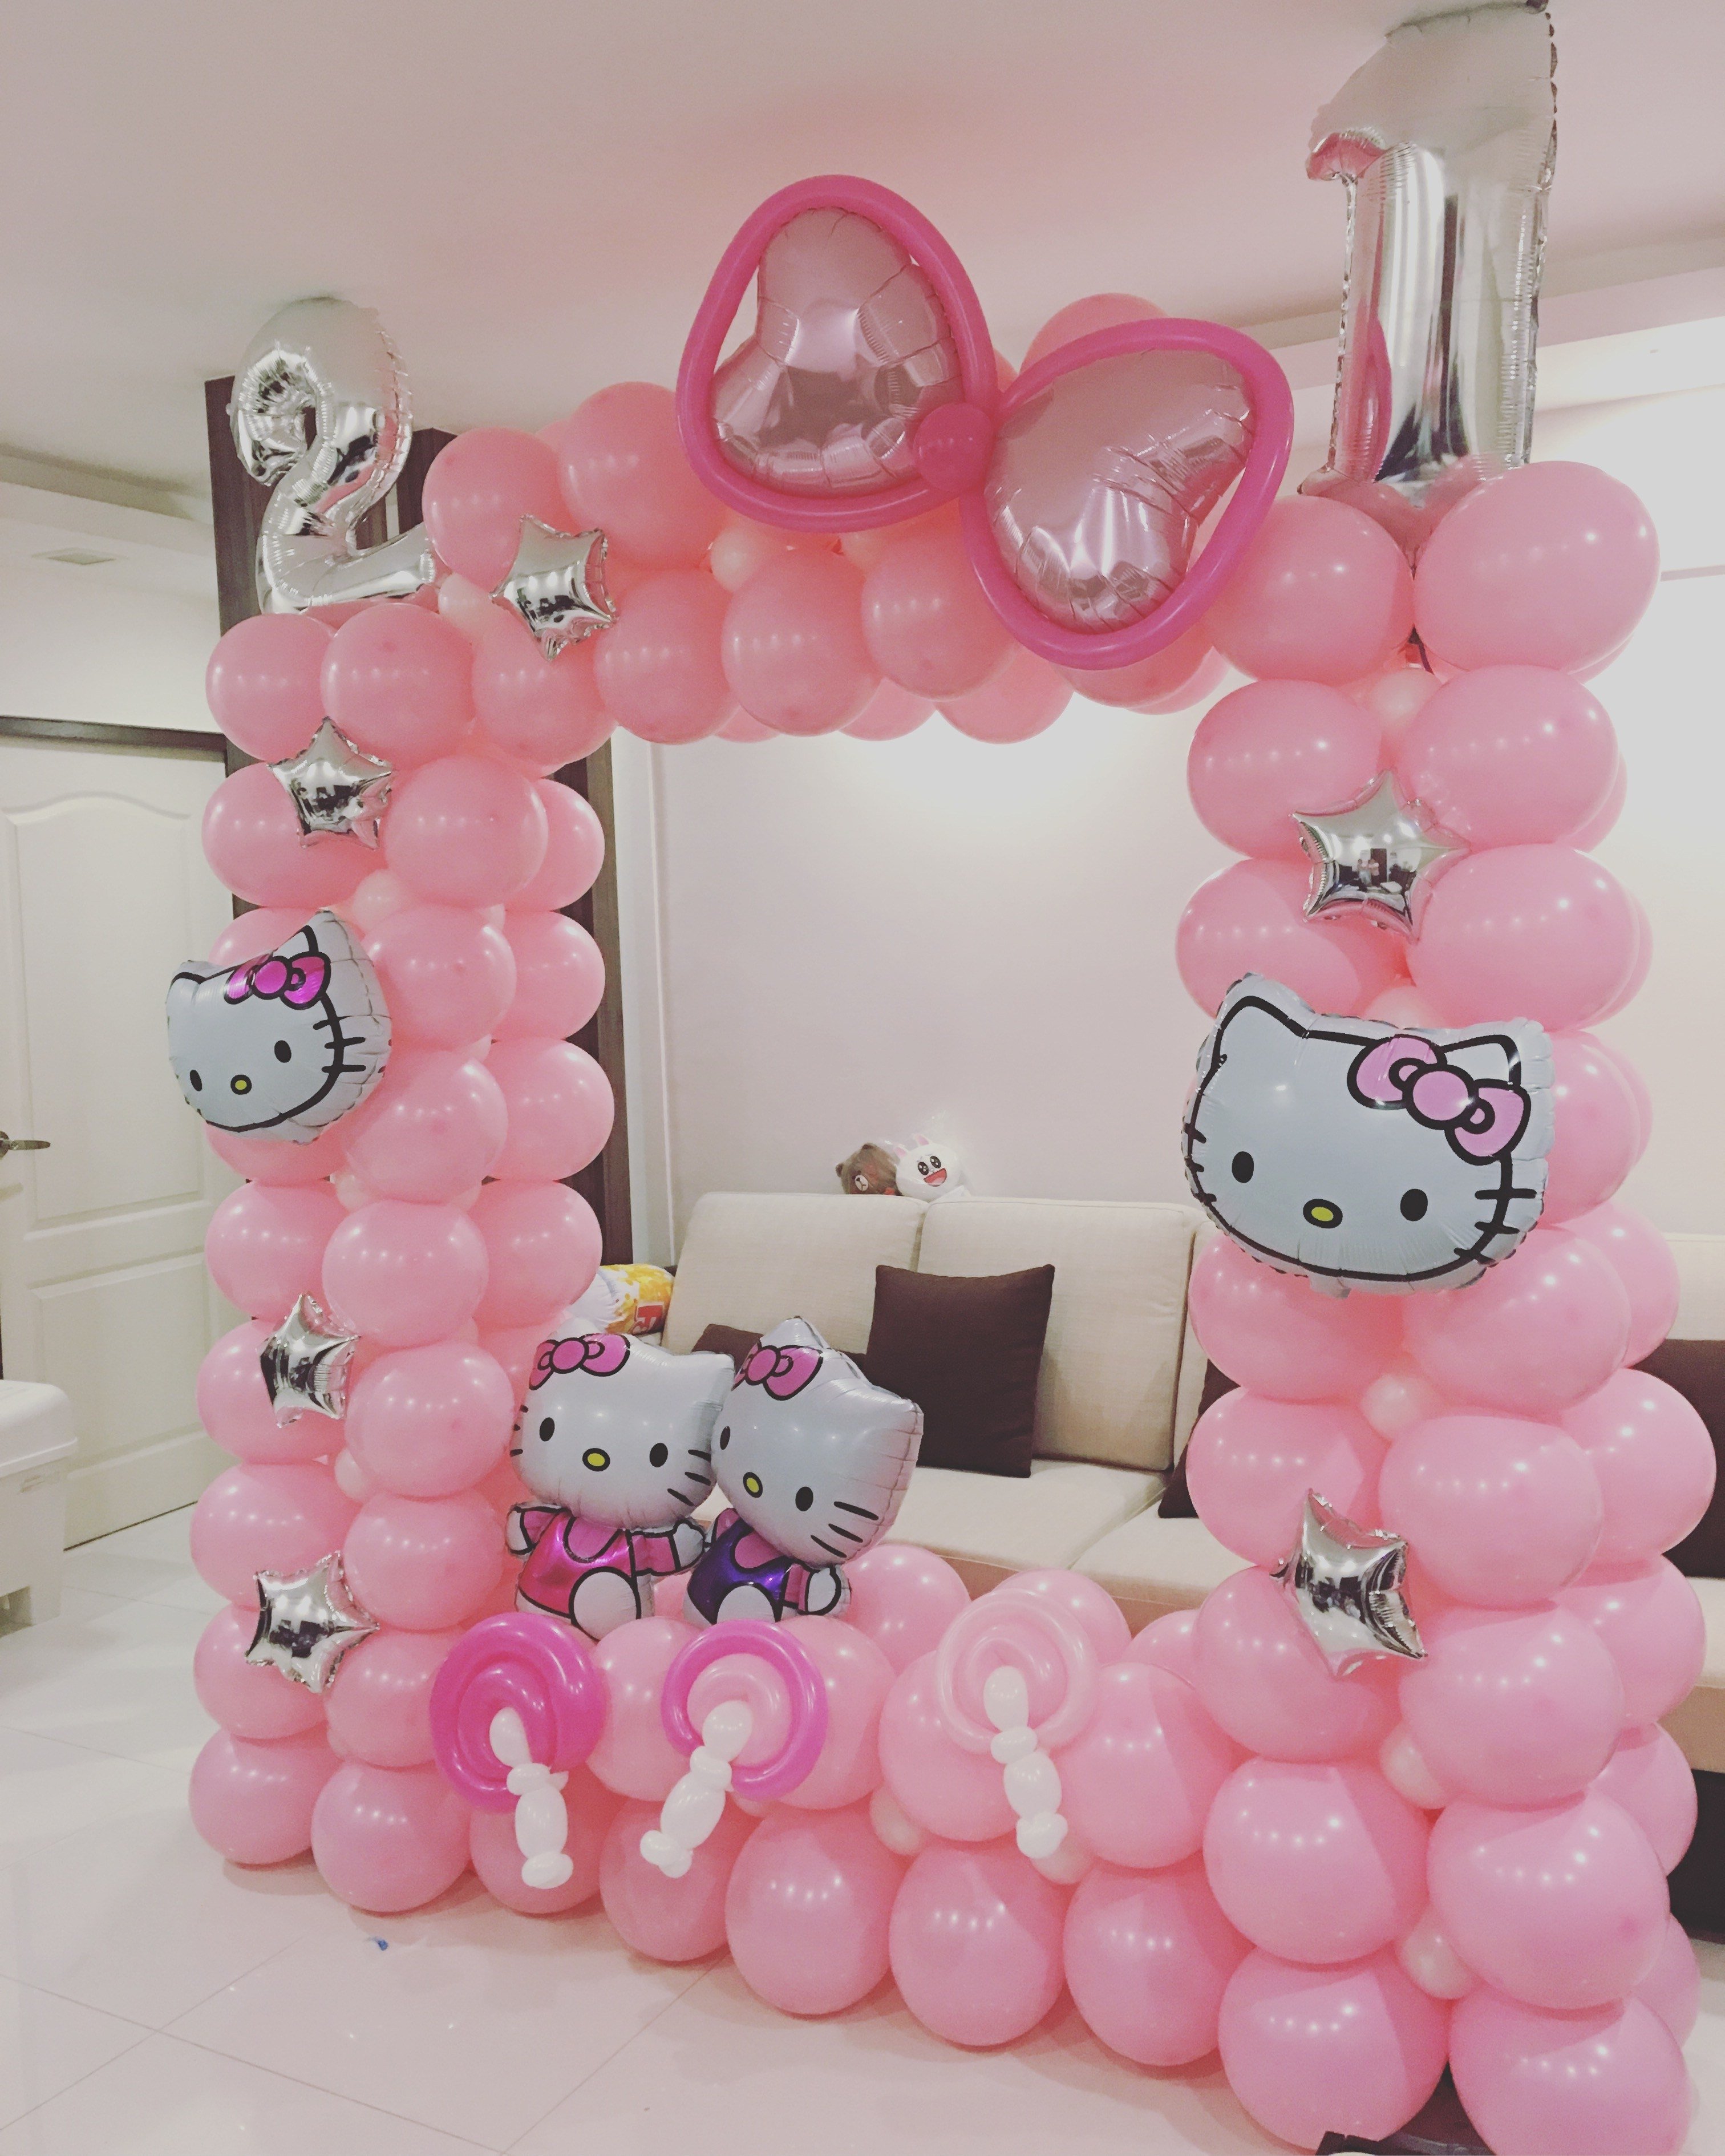 10 Fashionable Hello Kitty Theme Party Ideas 21st birthday balloon decorations 2022